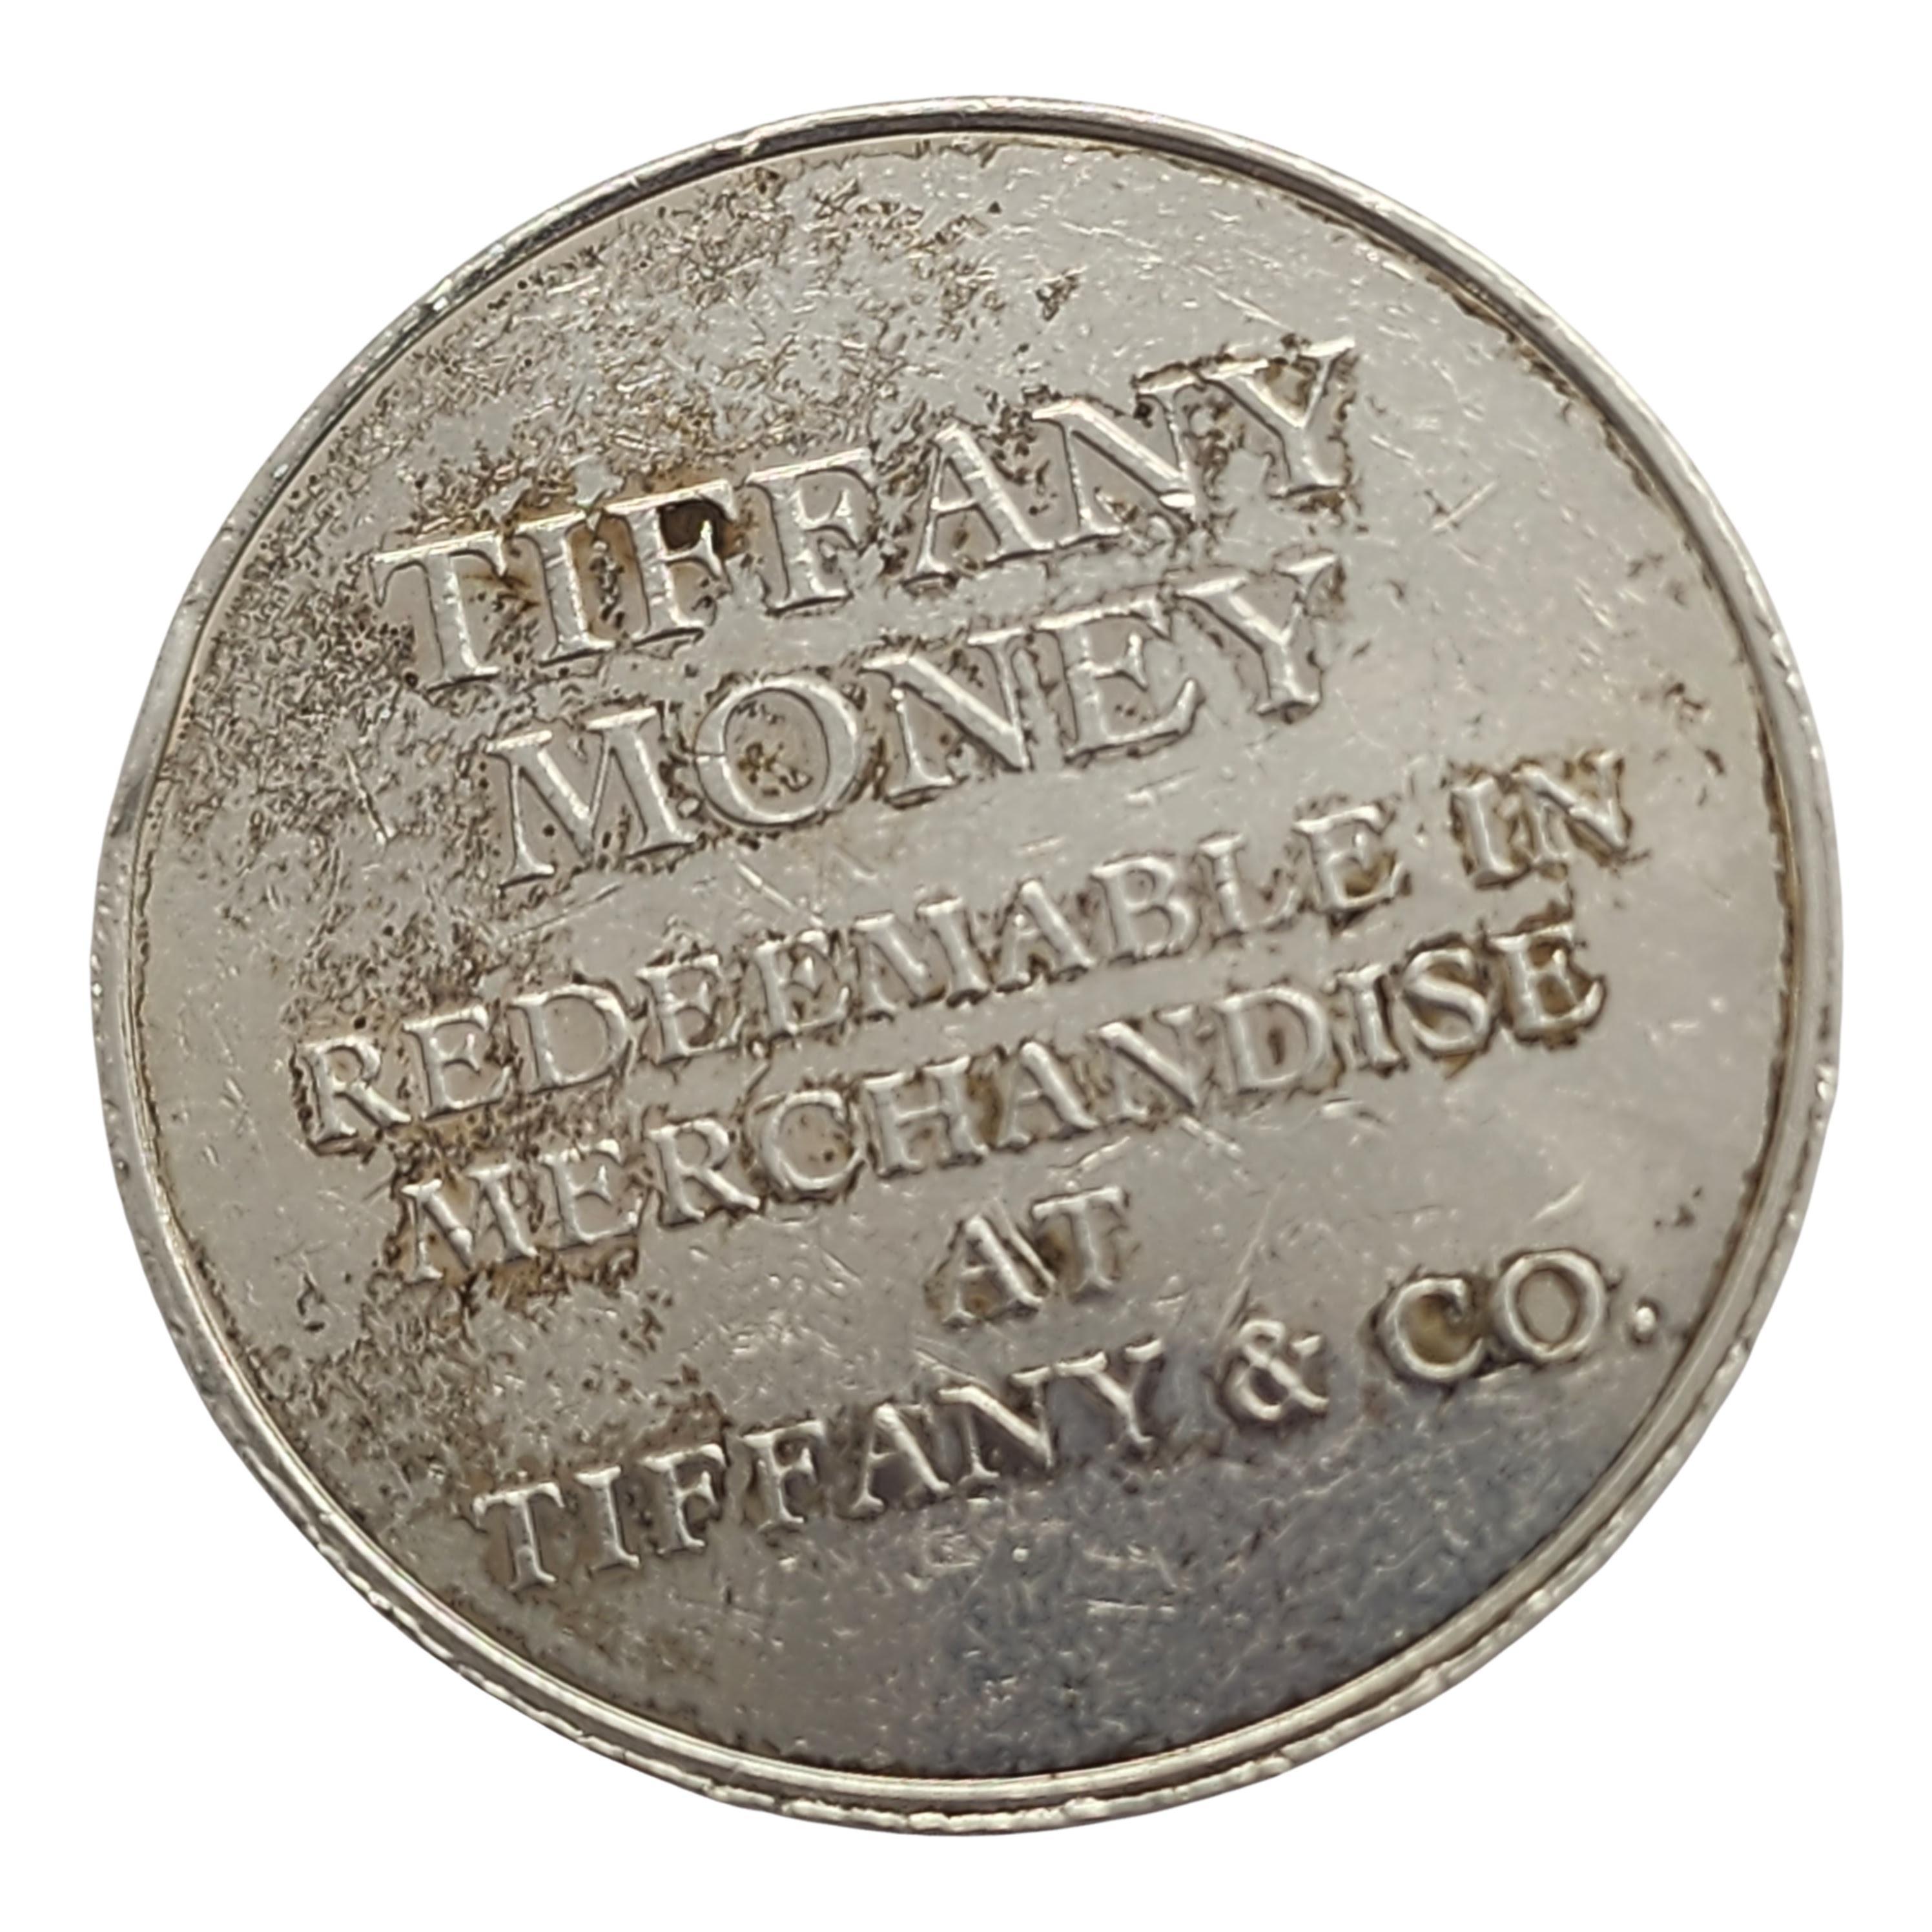 Tiffany & Co Sterling Silver Money Coin Twenty Five Dollars #15960 1